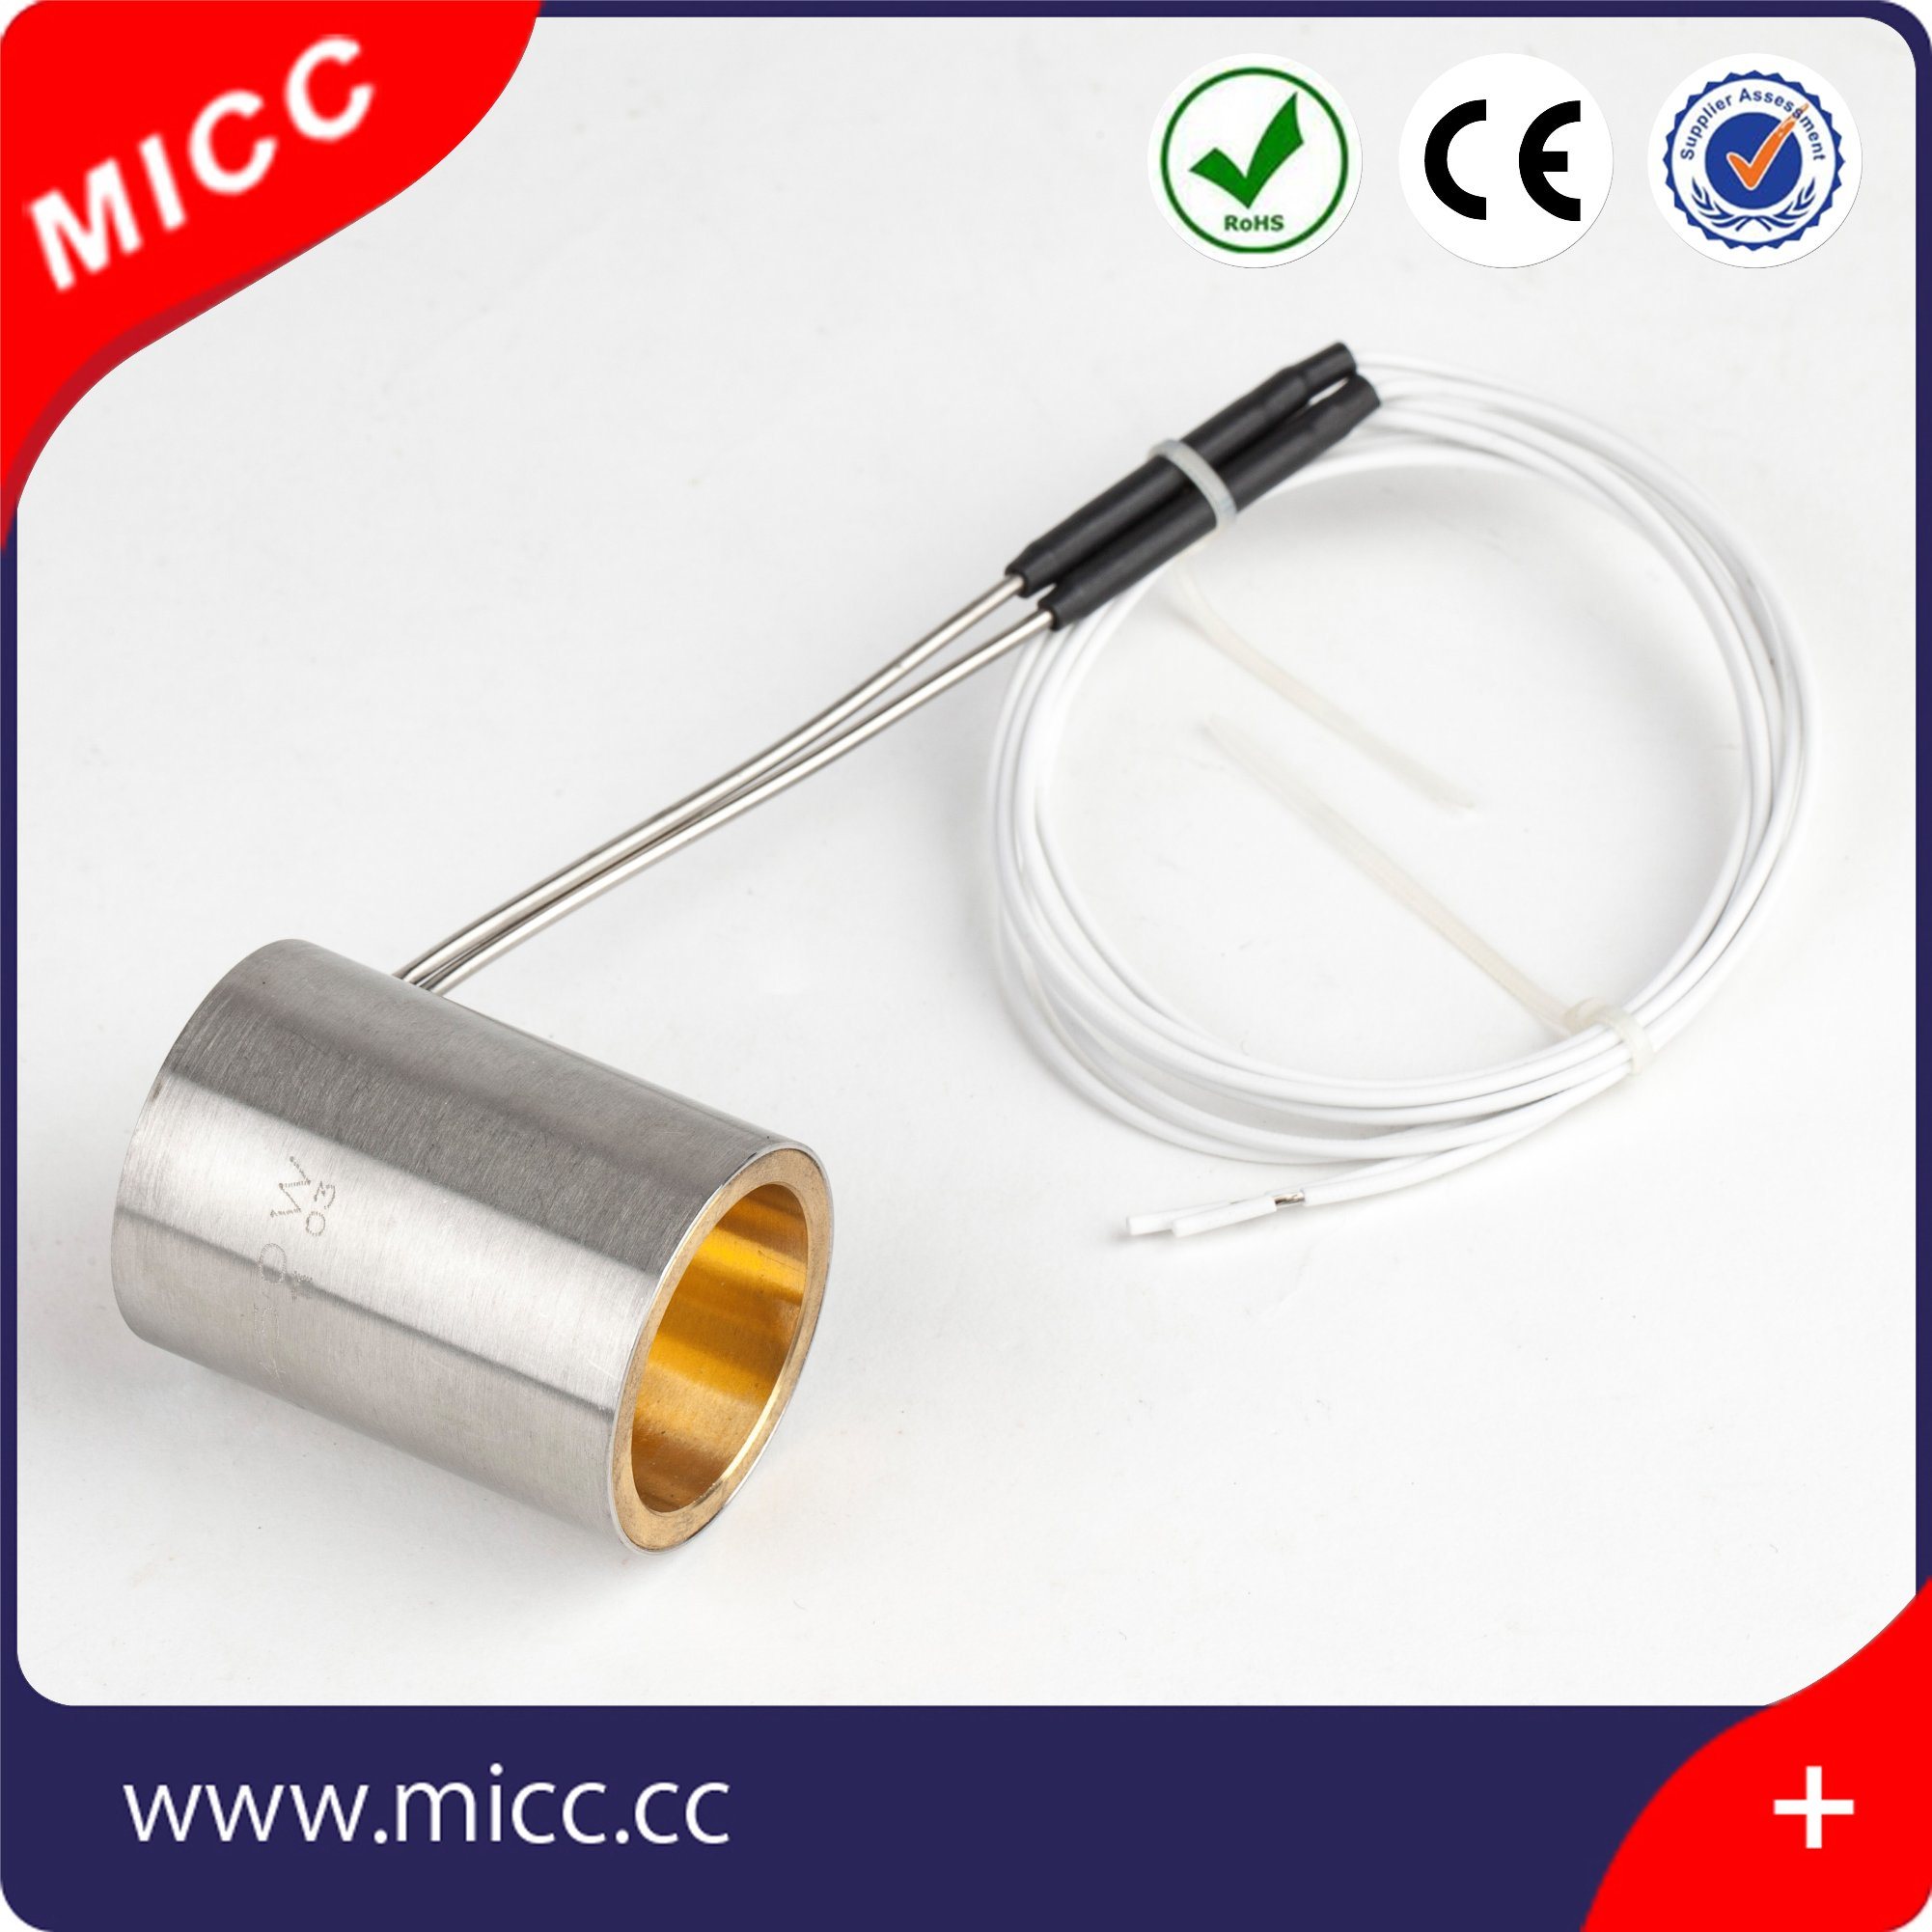 Micc DIY Stainless steel Materials Coil Hot Runner Heater